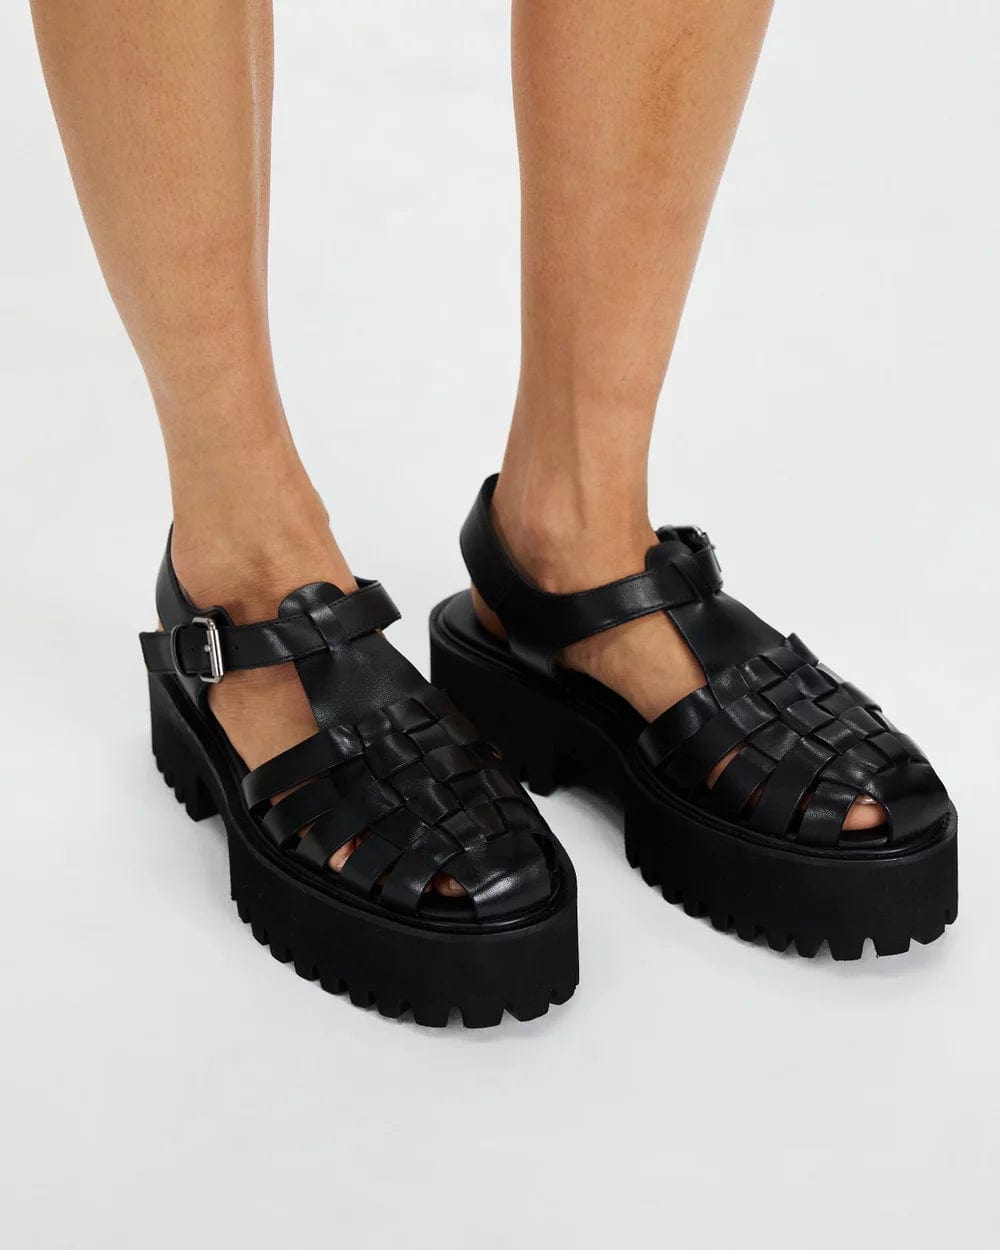 Alias Mae Footwear Alias Mae | Quince Sandals - Black